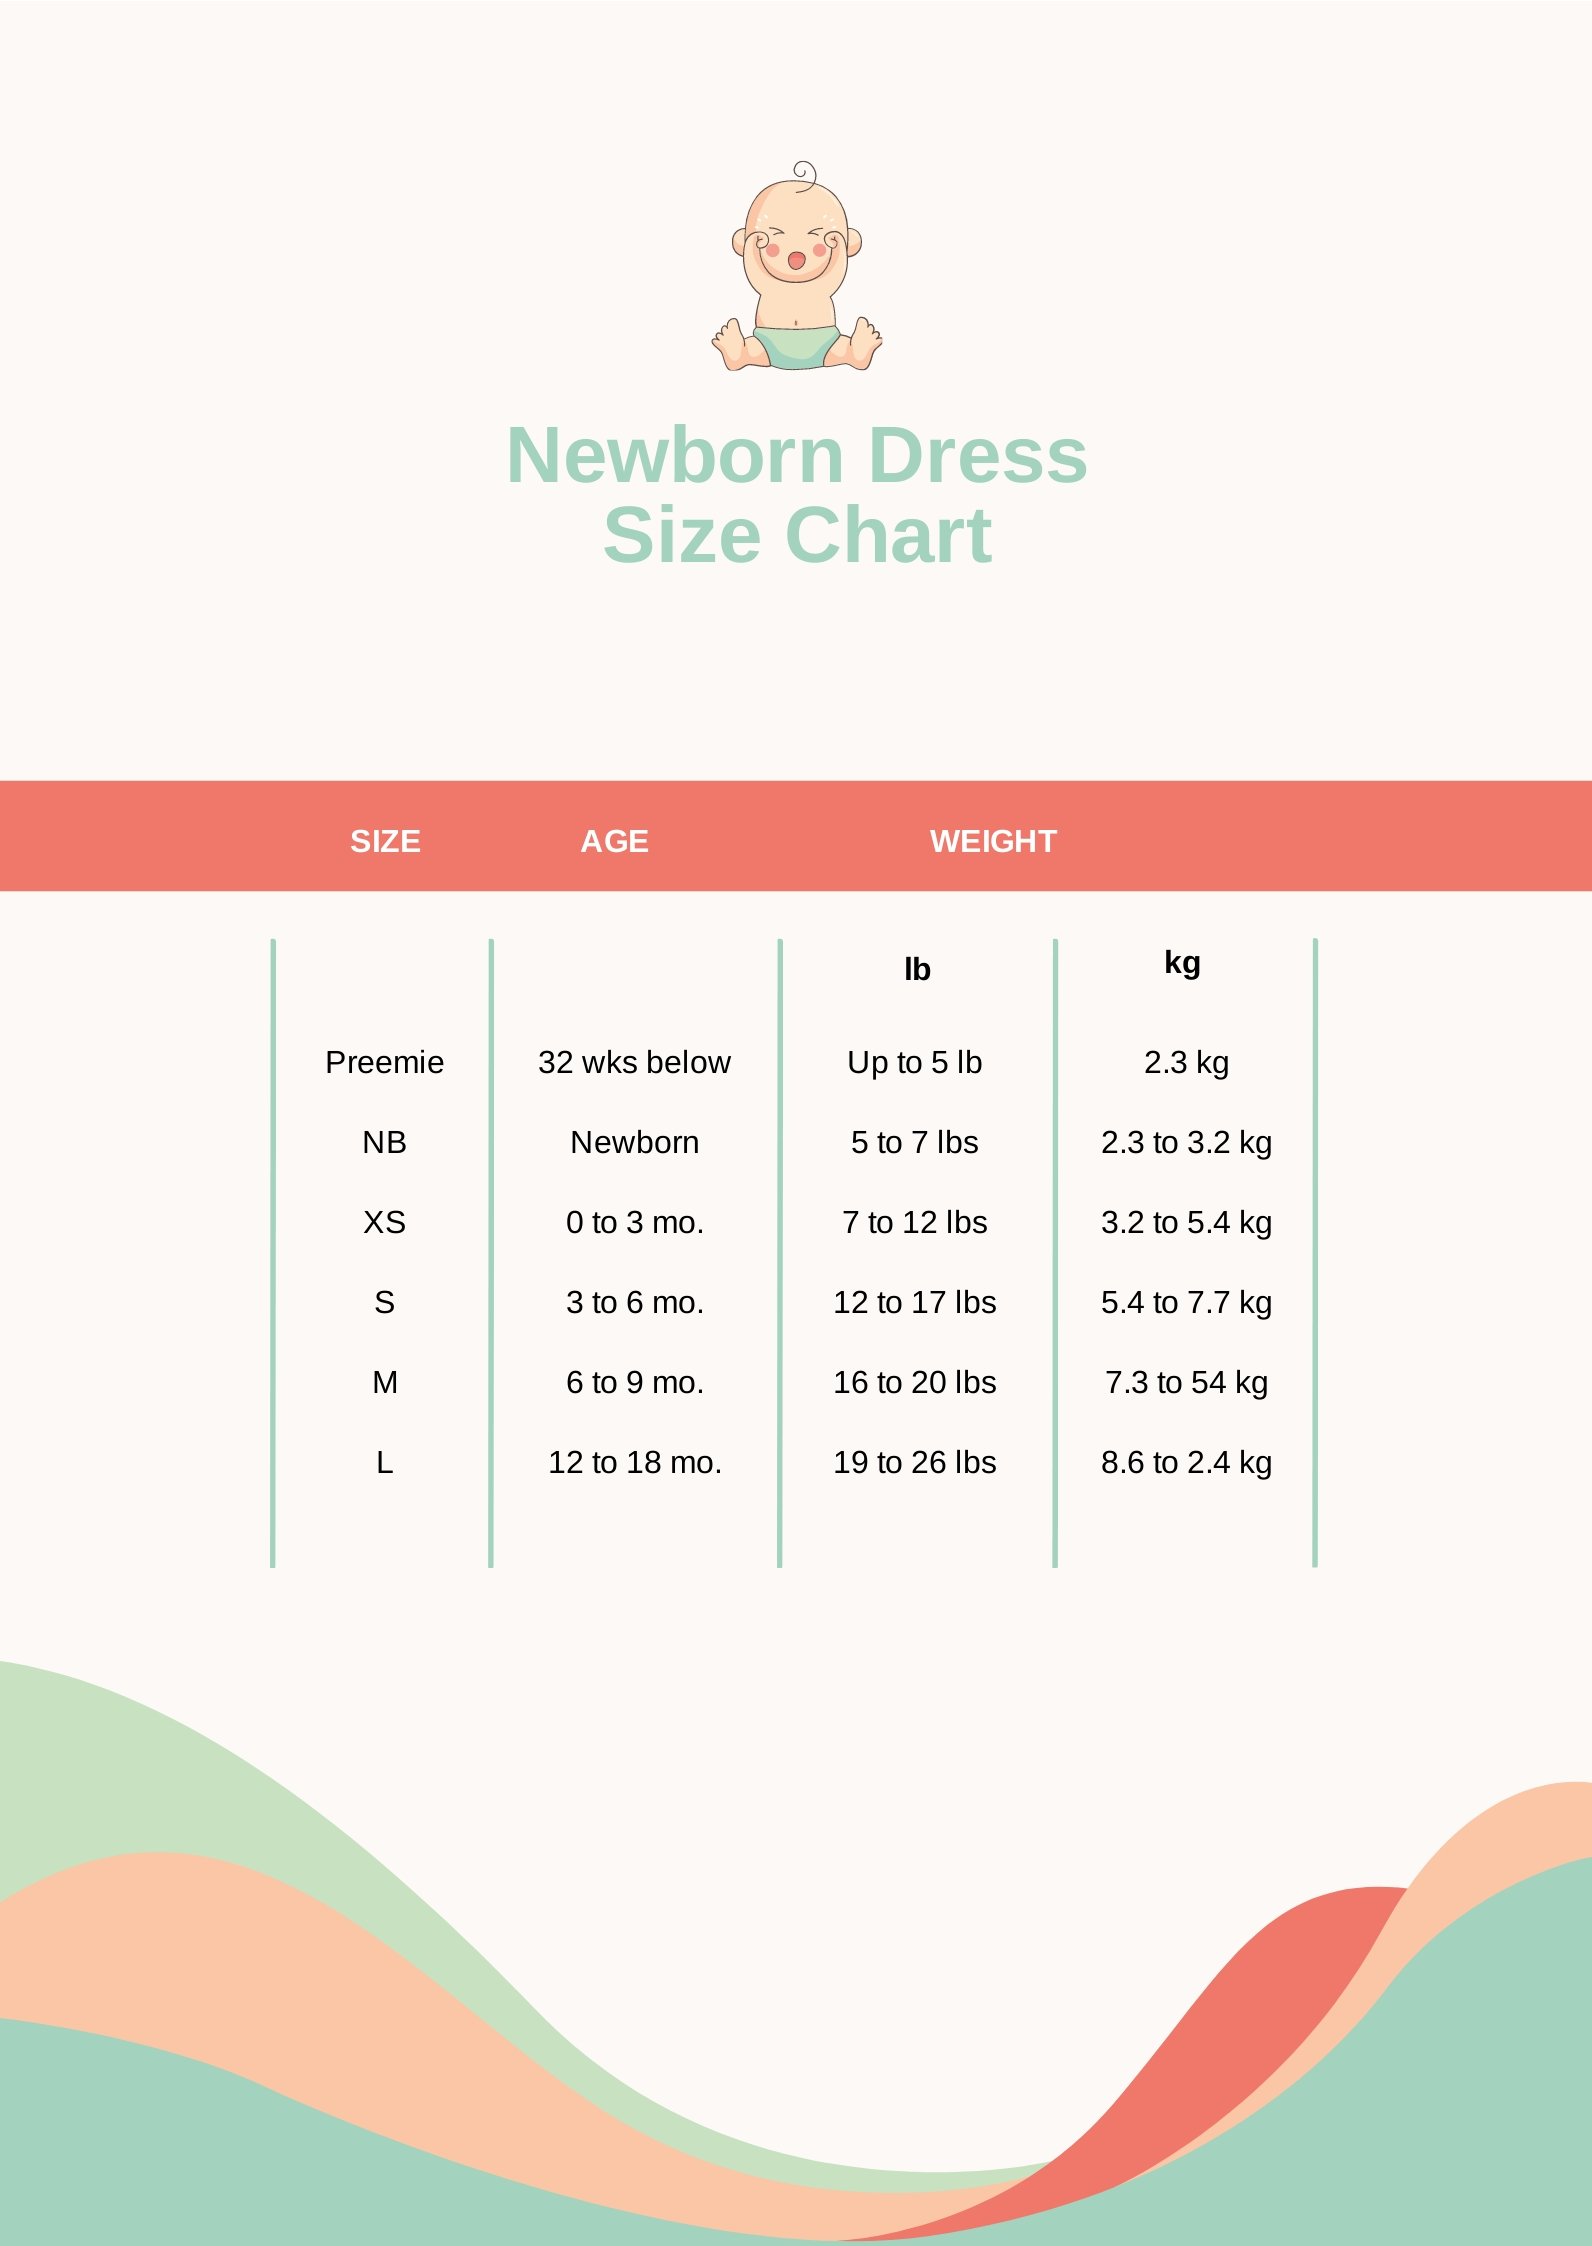 FREE Dress Size Chart Template - Download in Word, Google Docs, PDF,  Illustrator, JPG